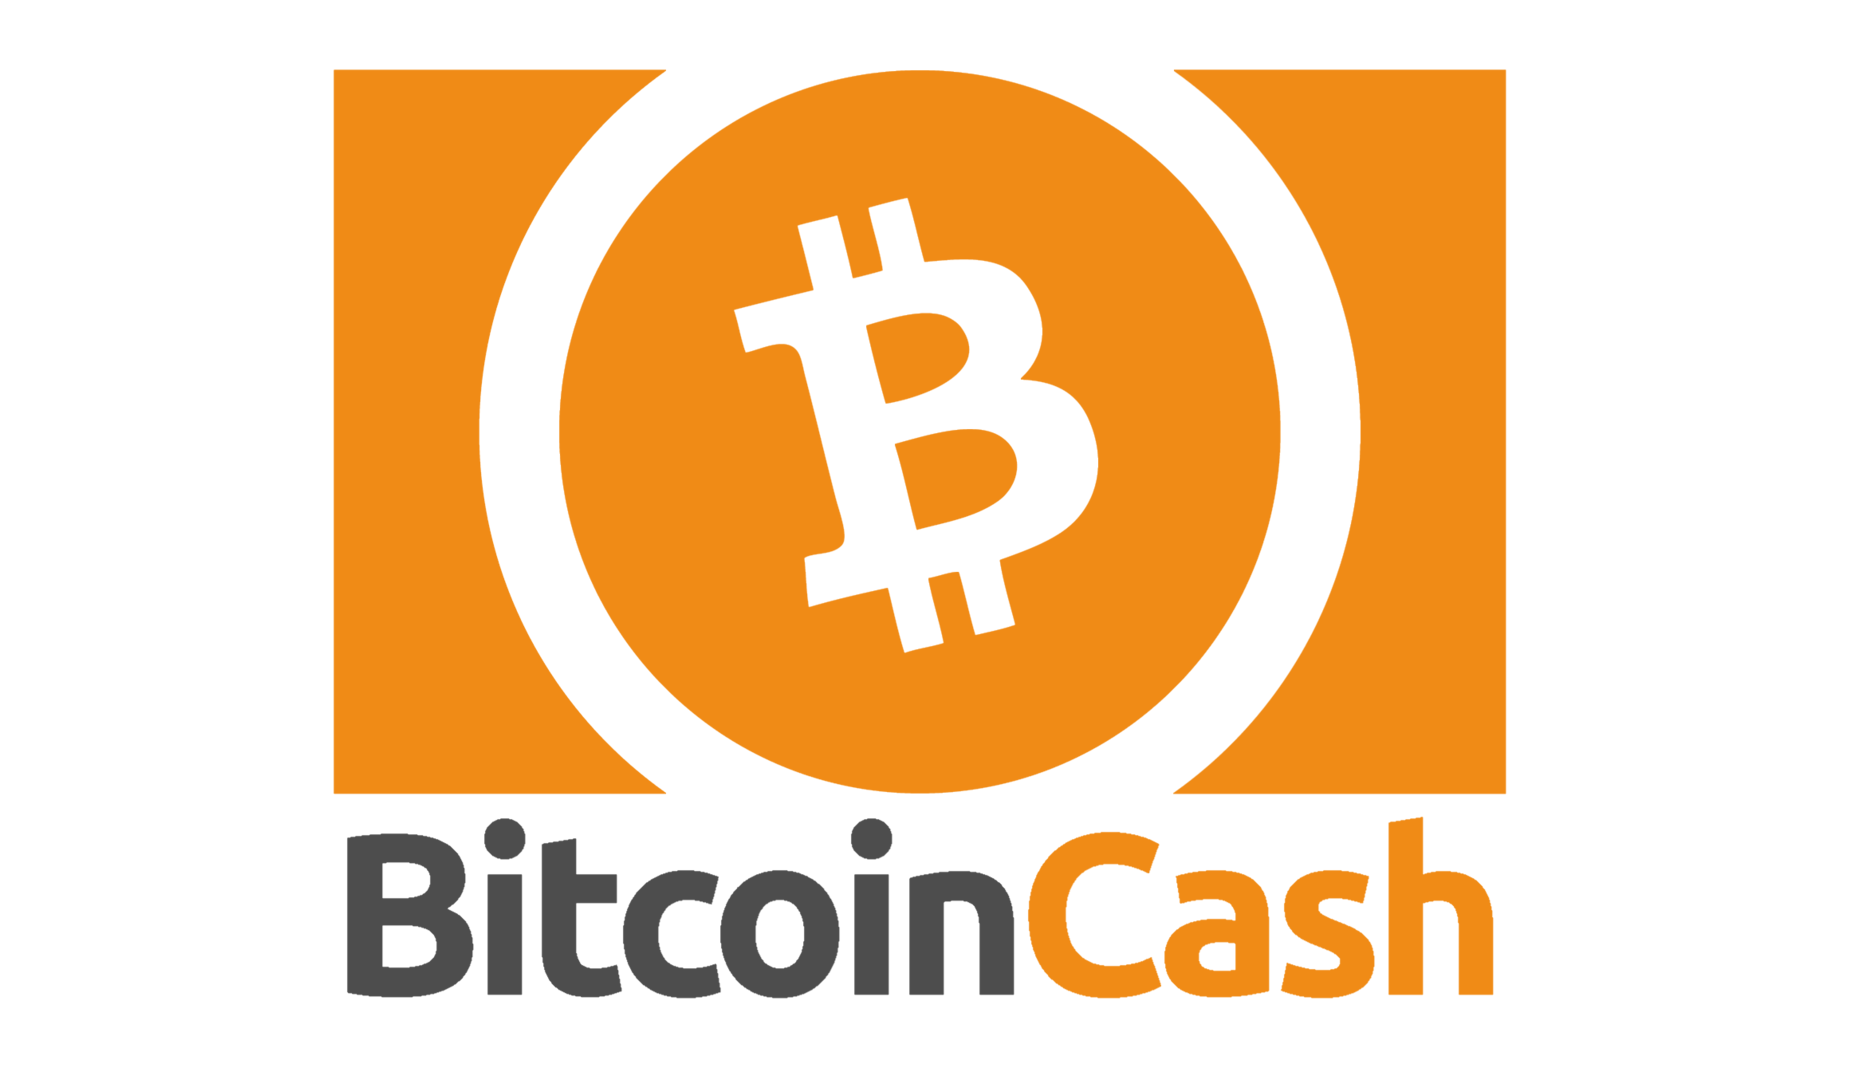 Bitcoin cash will be supported обмена биткоинов в рубли